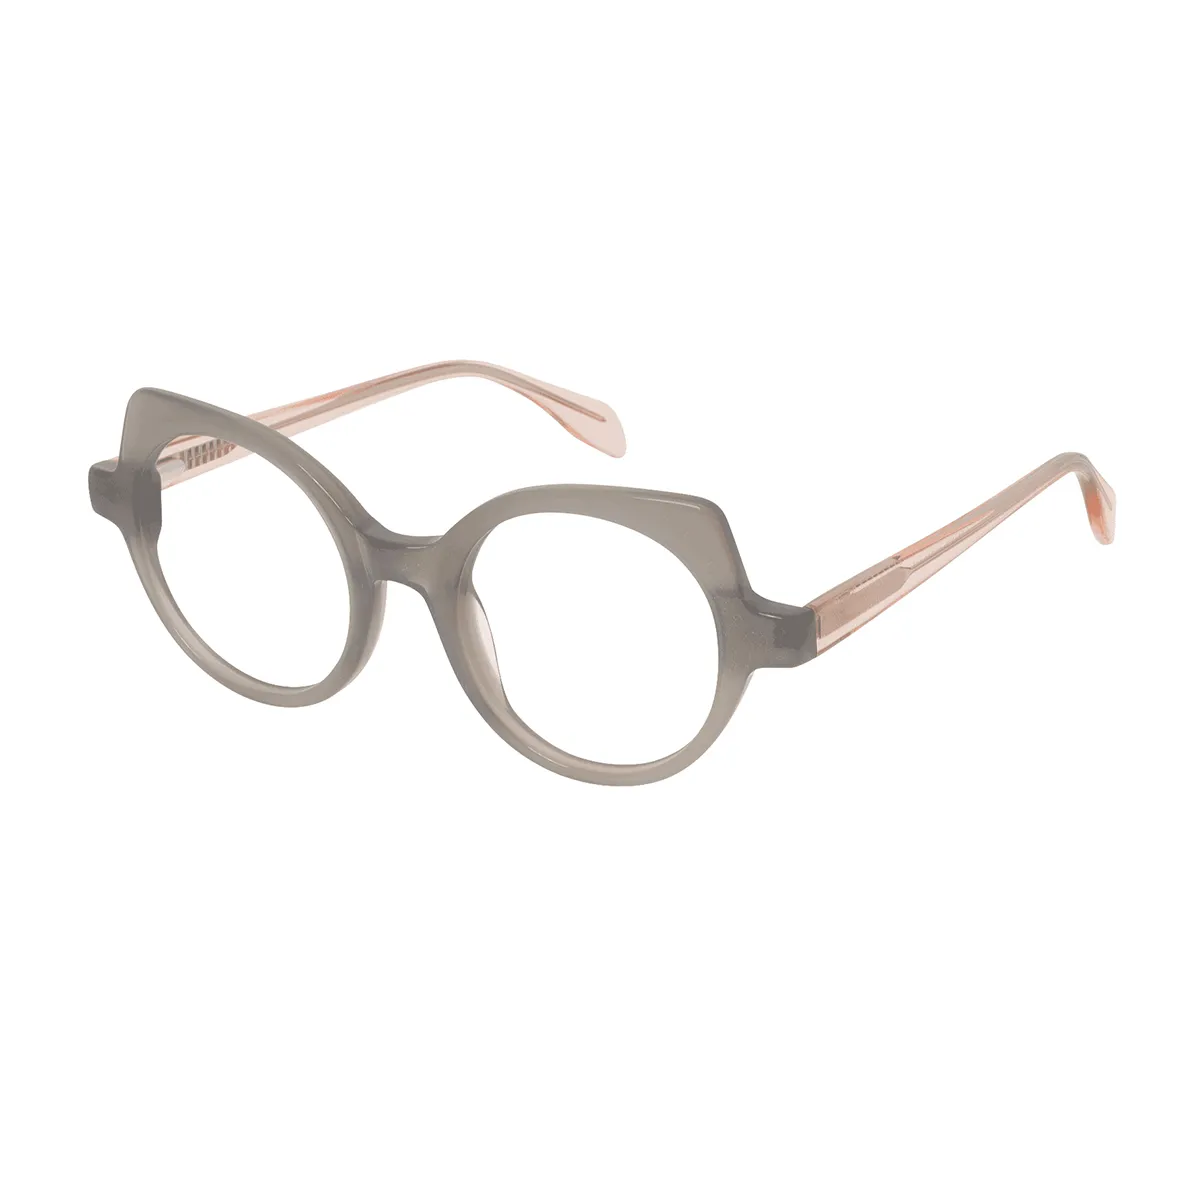 Molina - Geometric Gray-Pink Glasses for Women